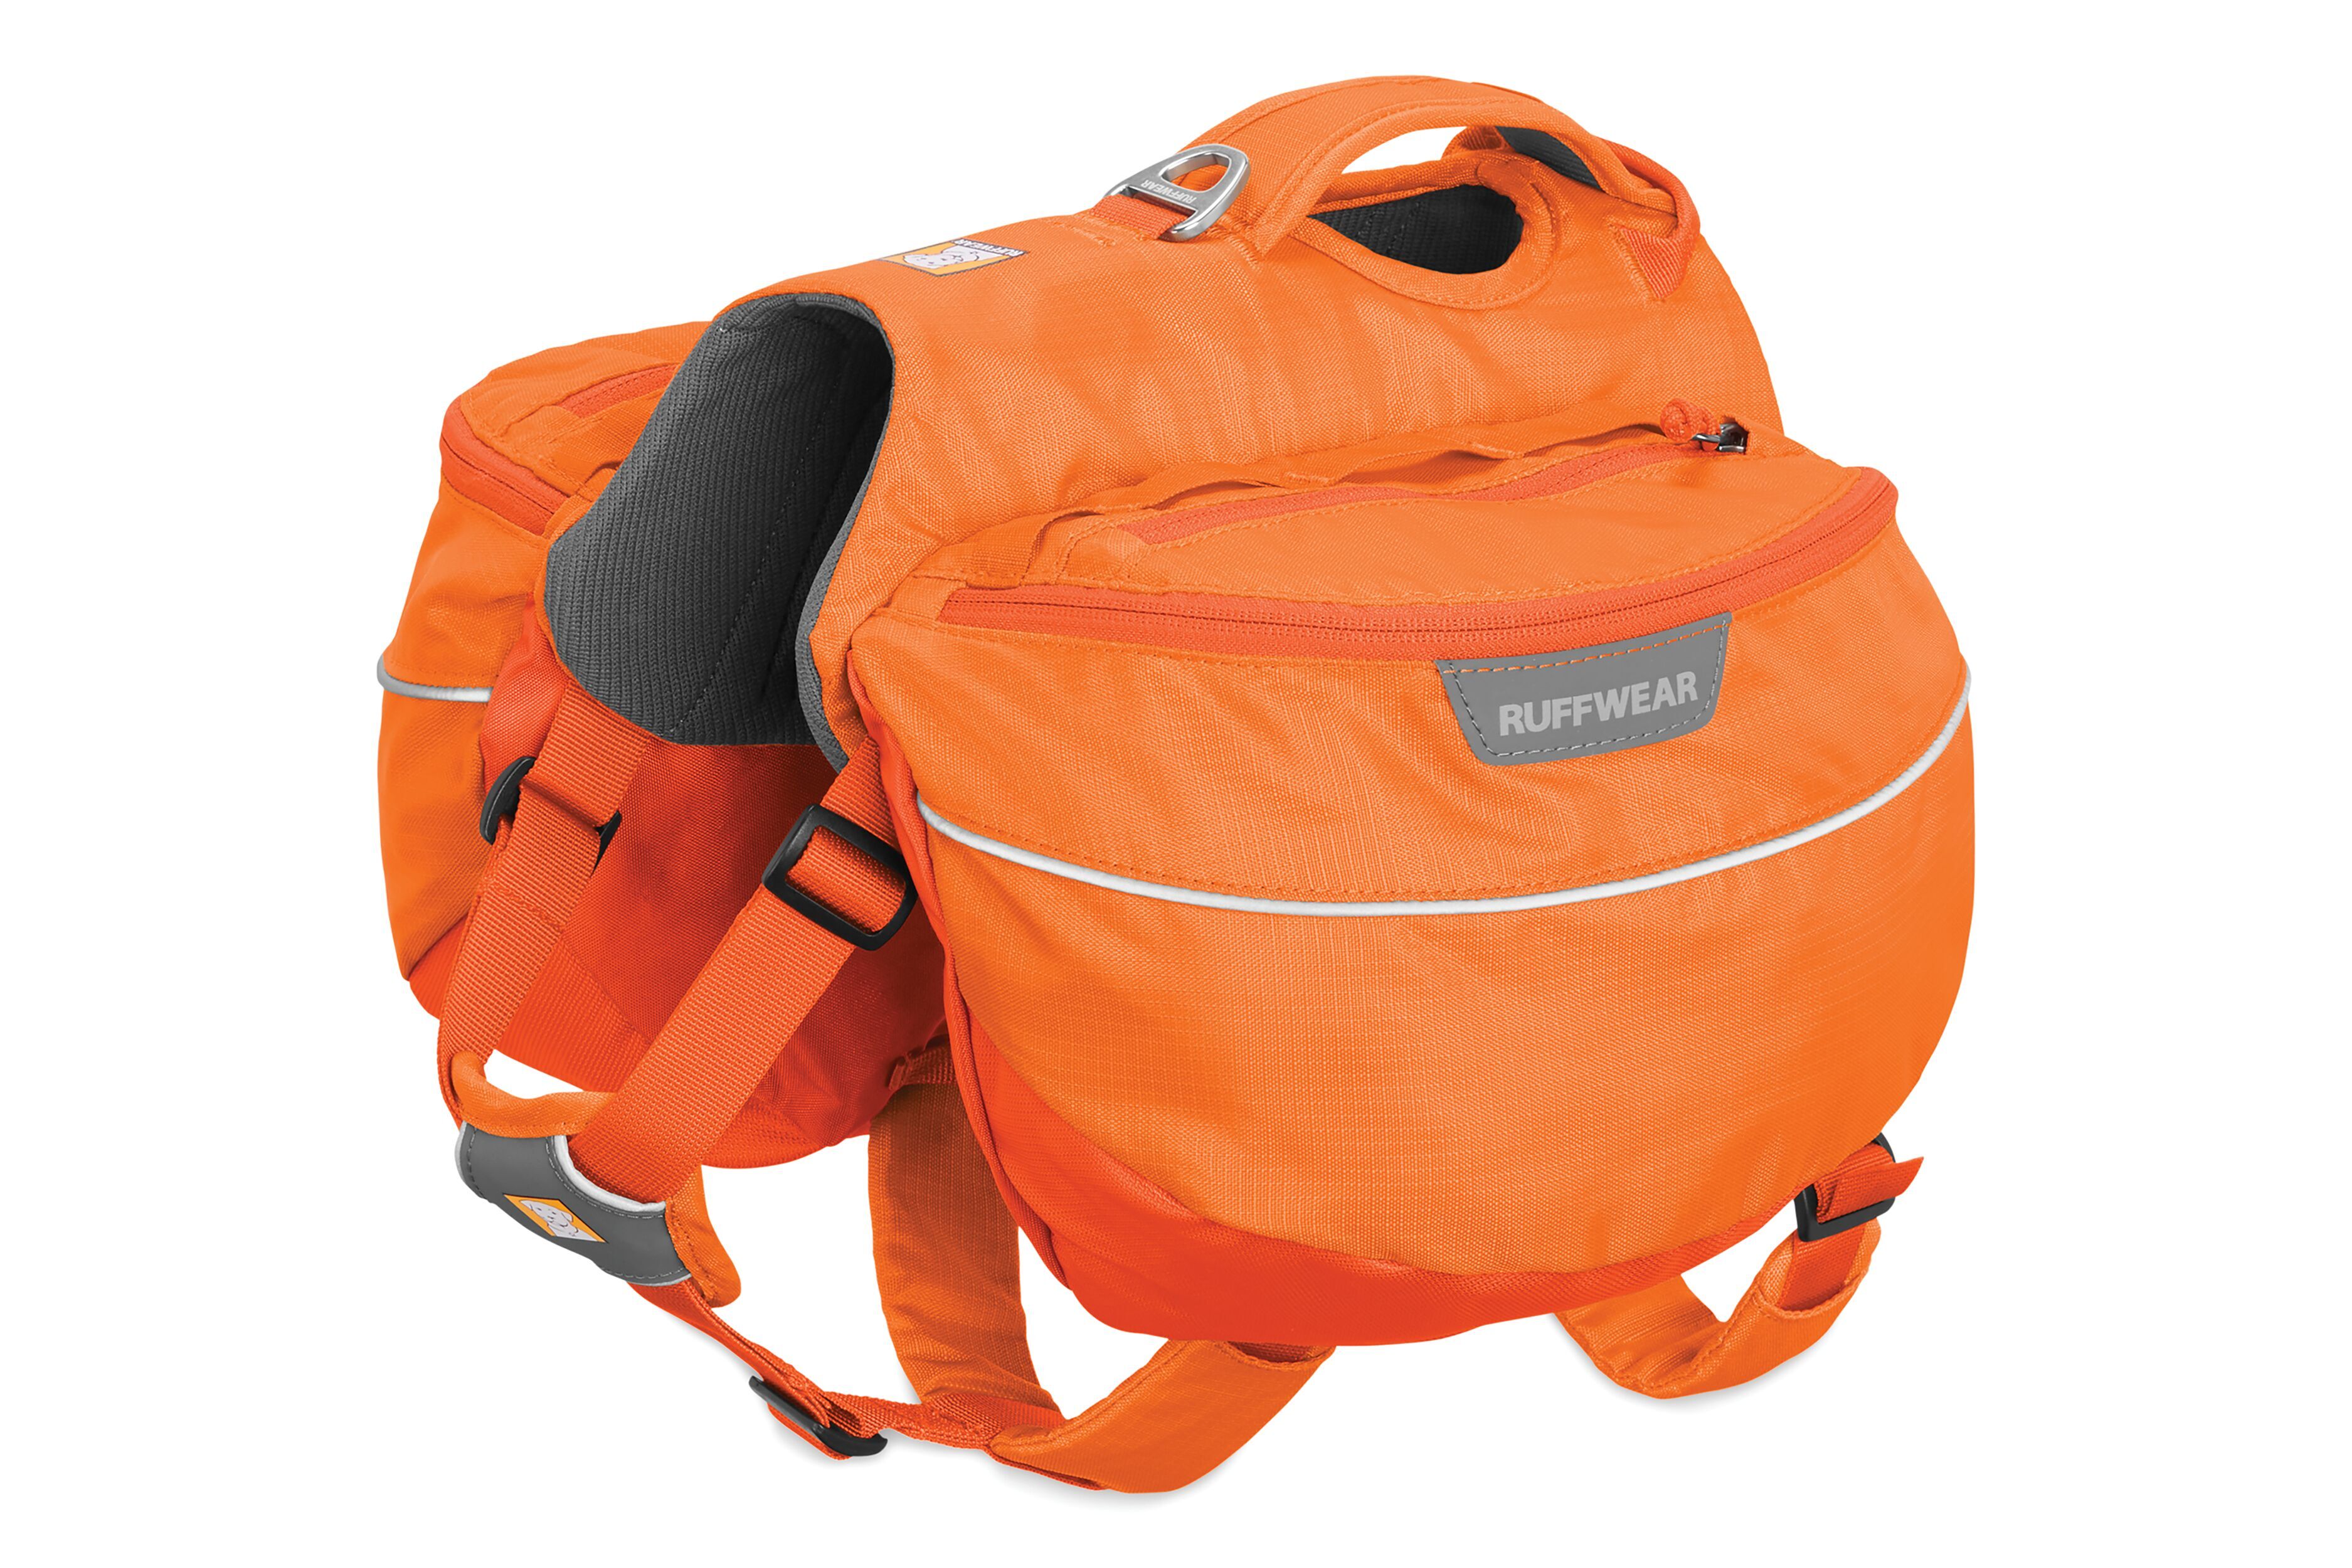 Ruffwear Approach Pack - Dog backpack